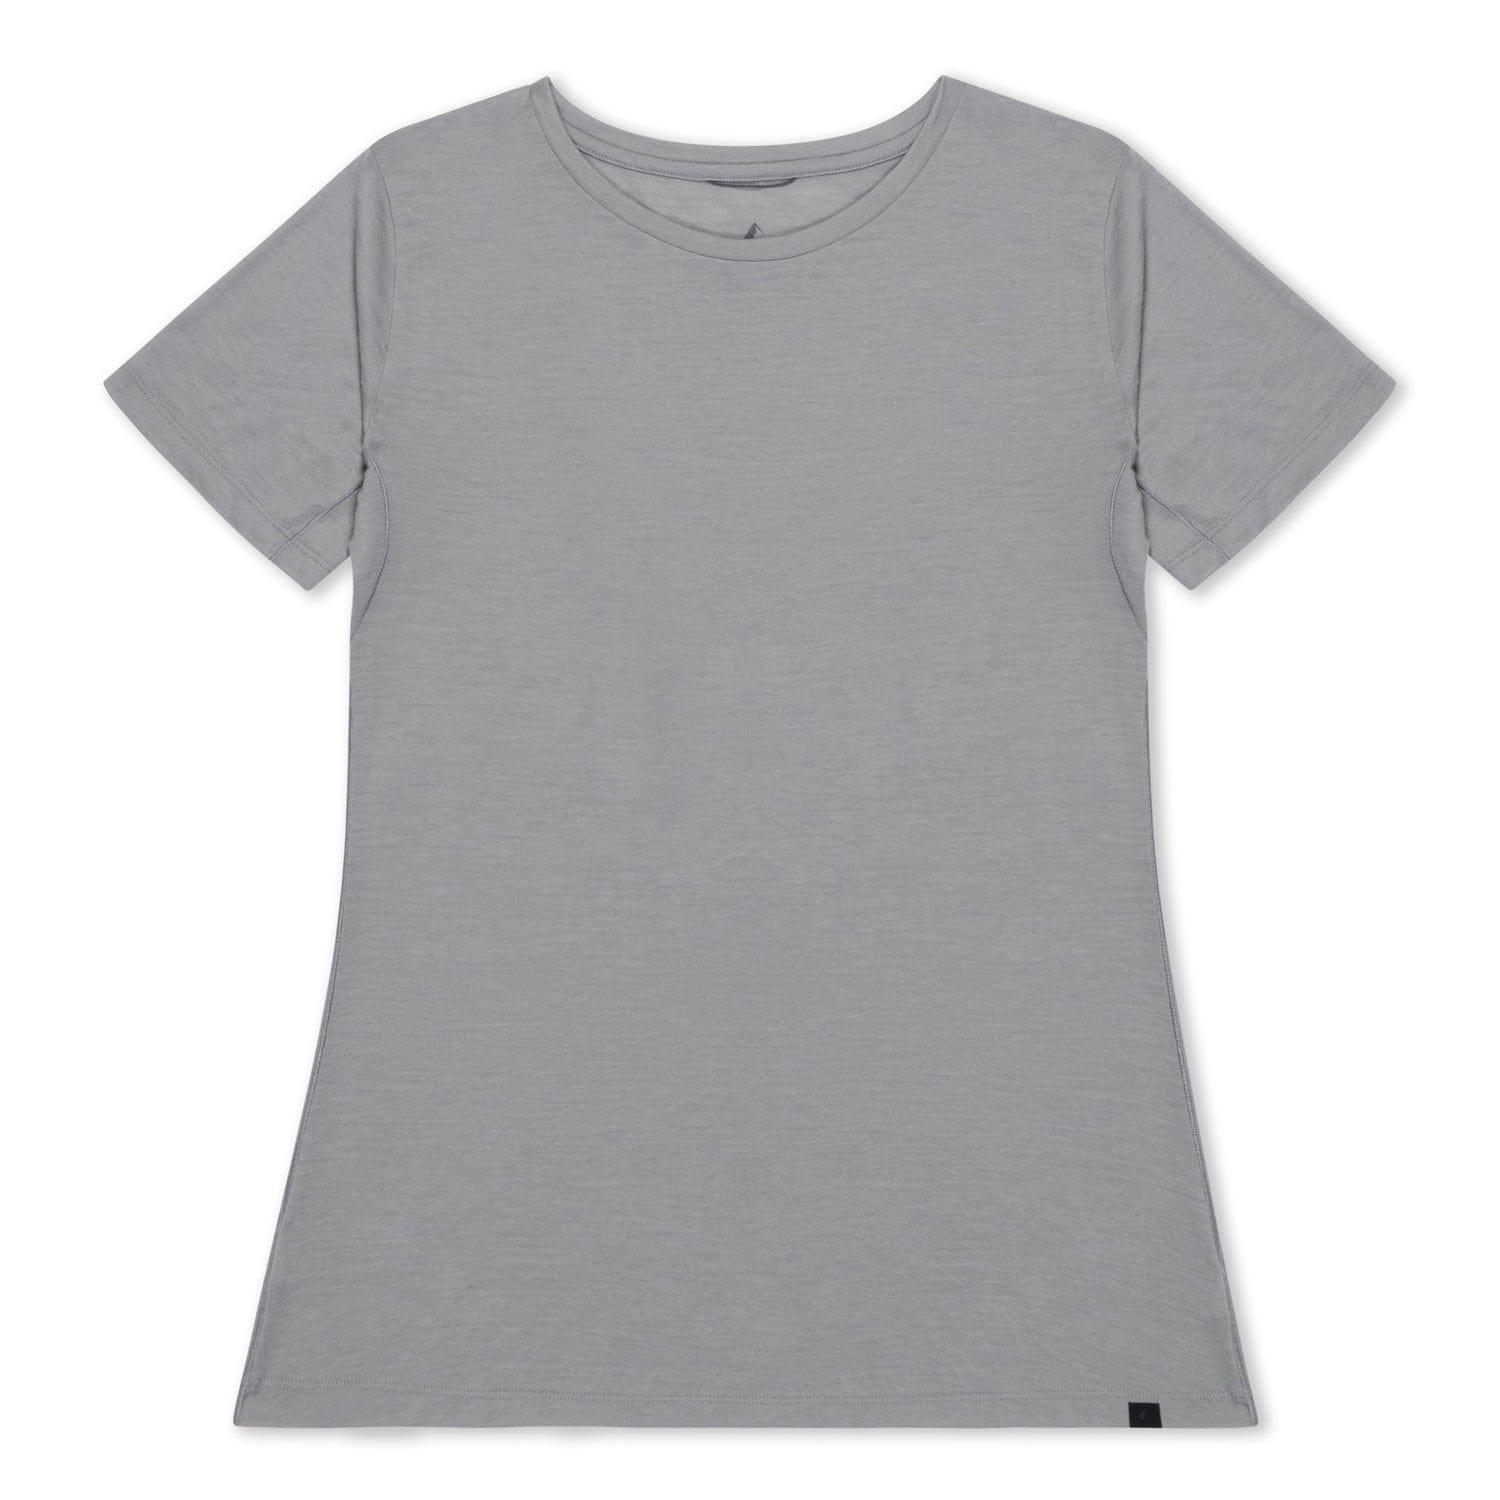 Sierra Cement Women's Pursuit Merino T-shirt